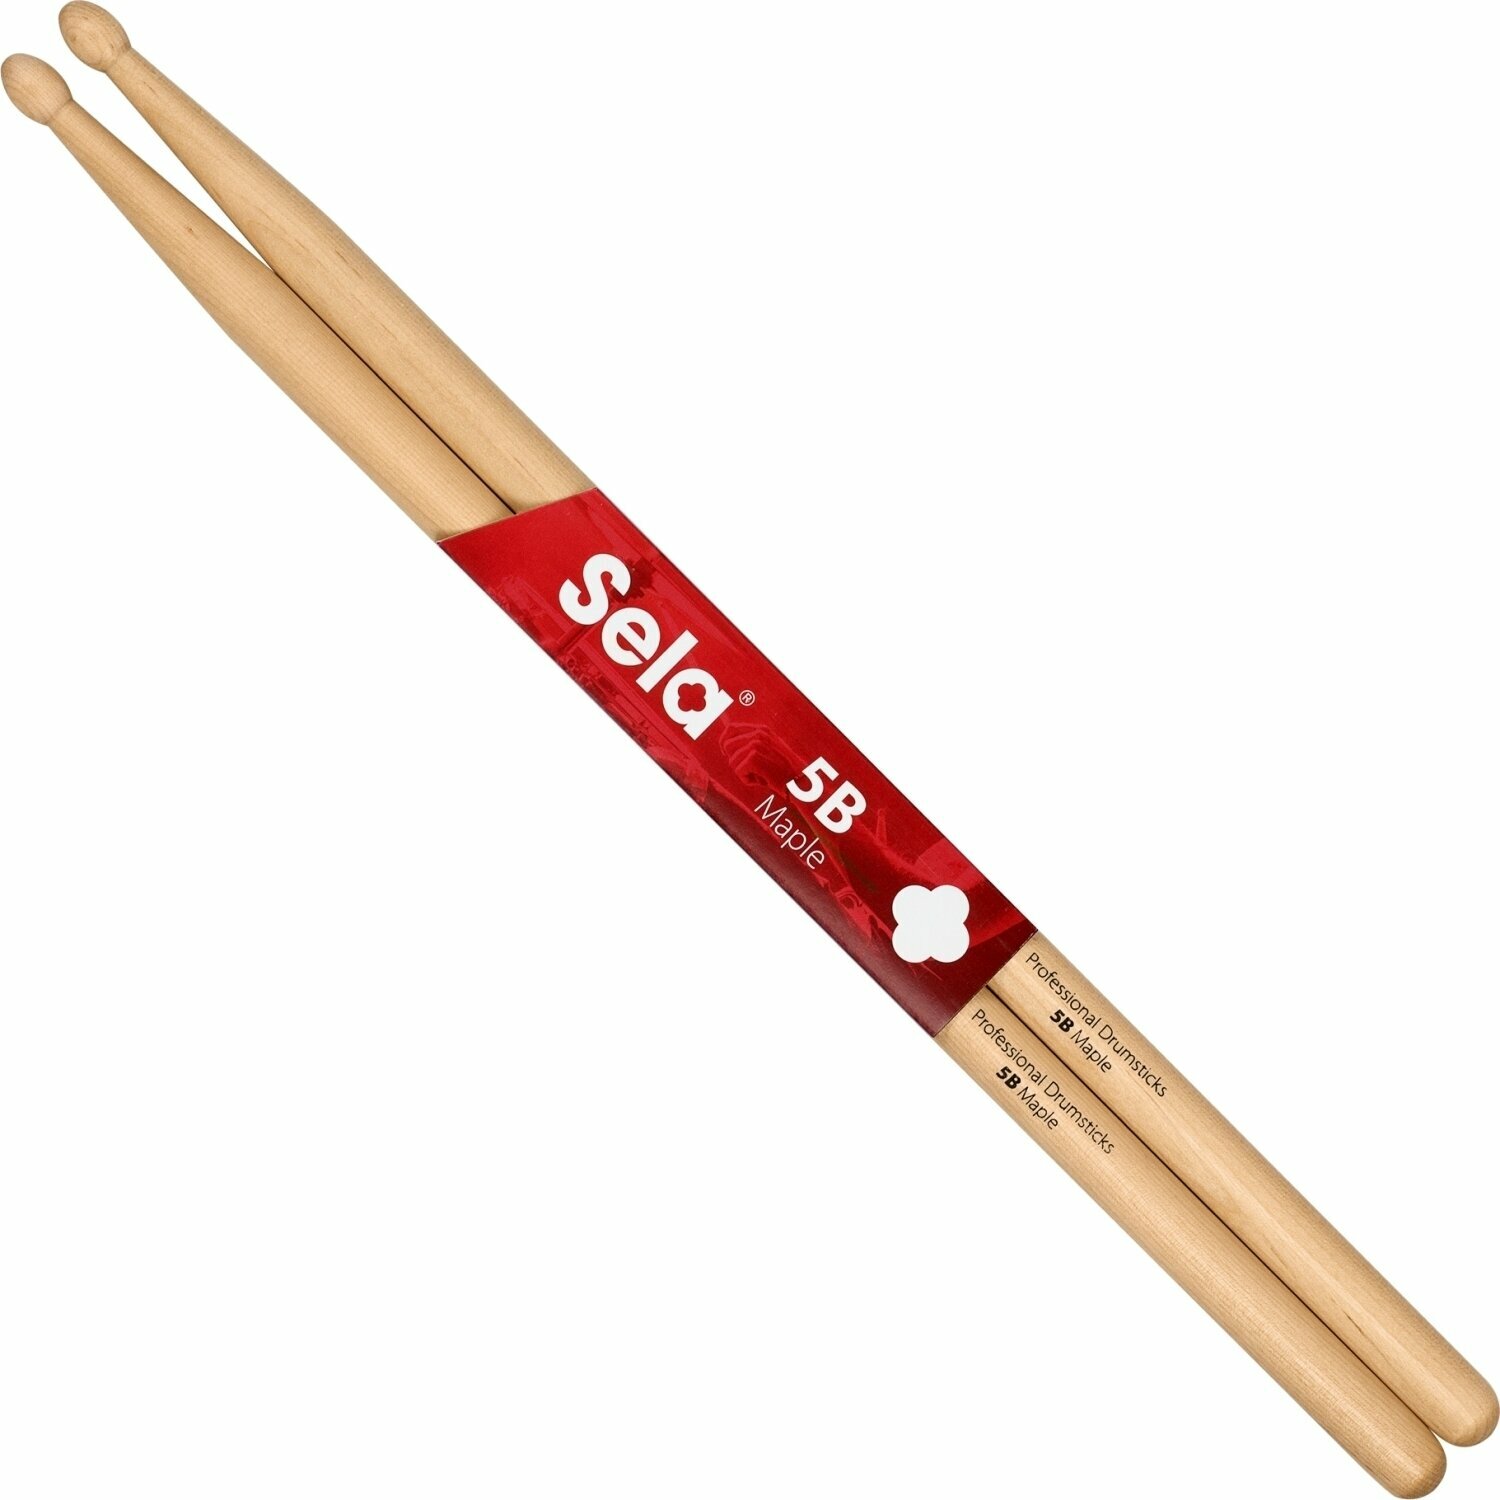 Baquetas Sela SE 273 Professional Drumsticks 5B - 6 Pair Baquetas